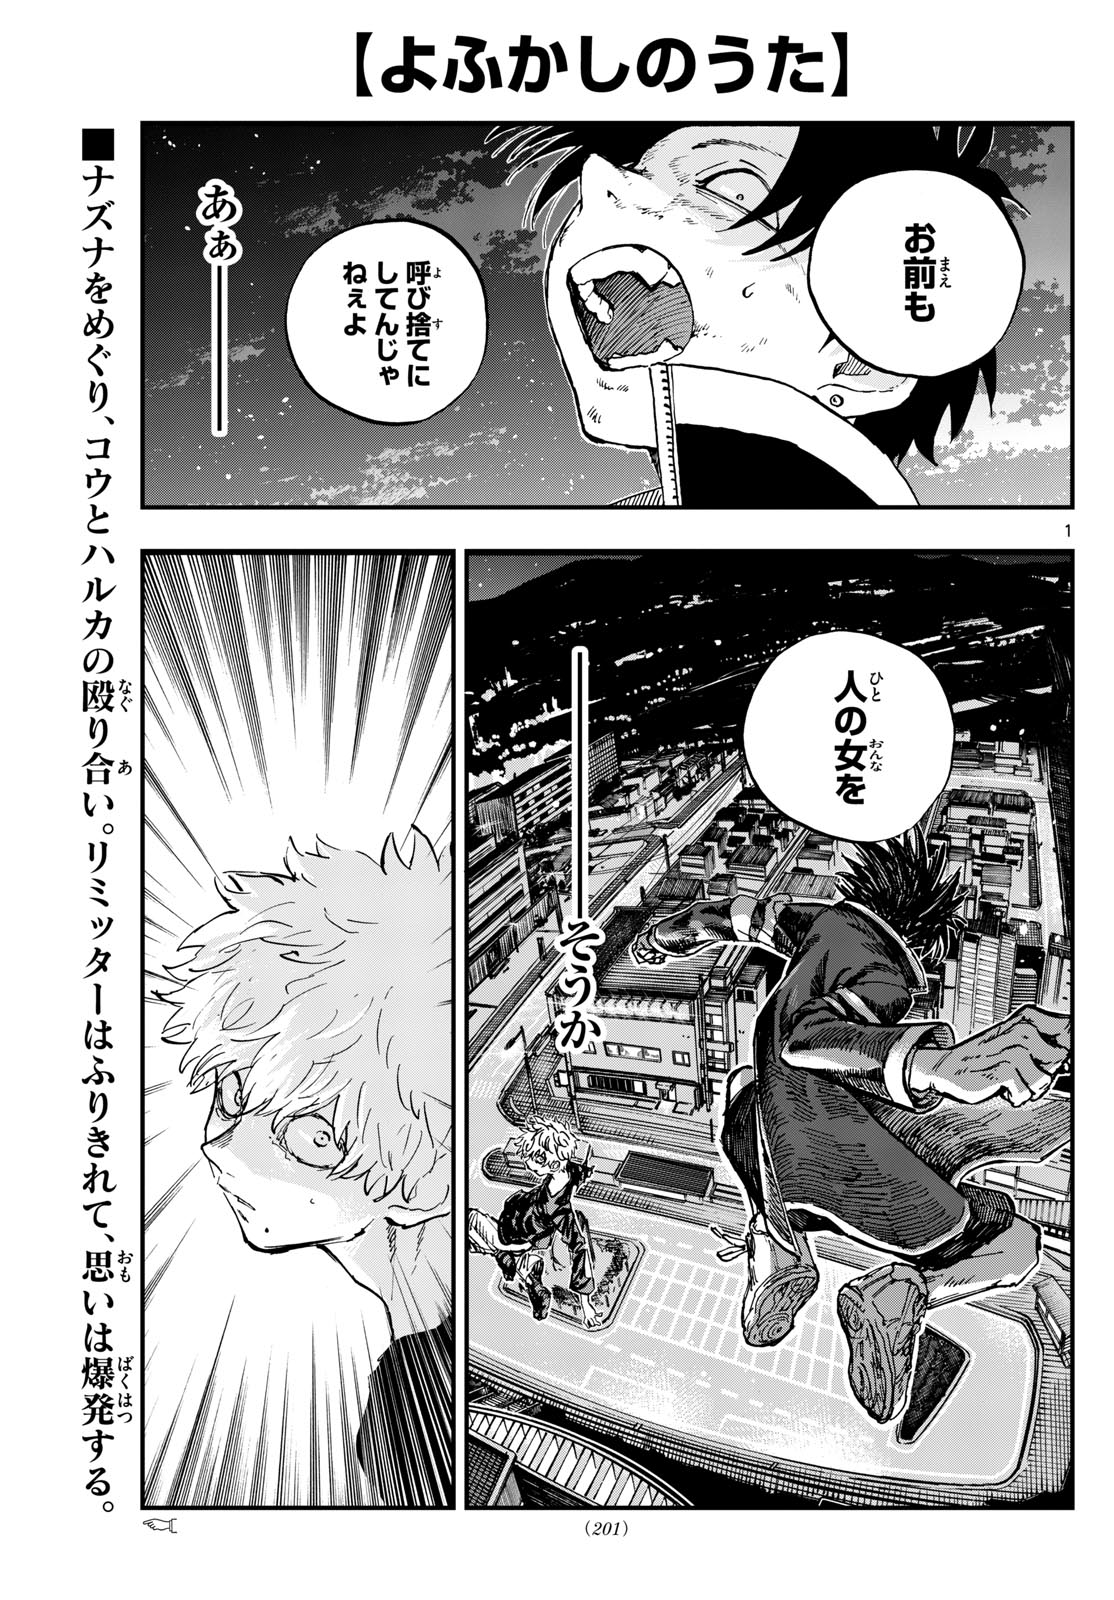 Yofukashi no Uta - Chapter 193 - Page 1